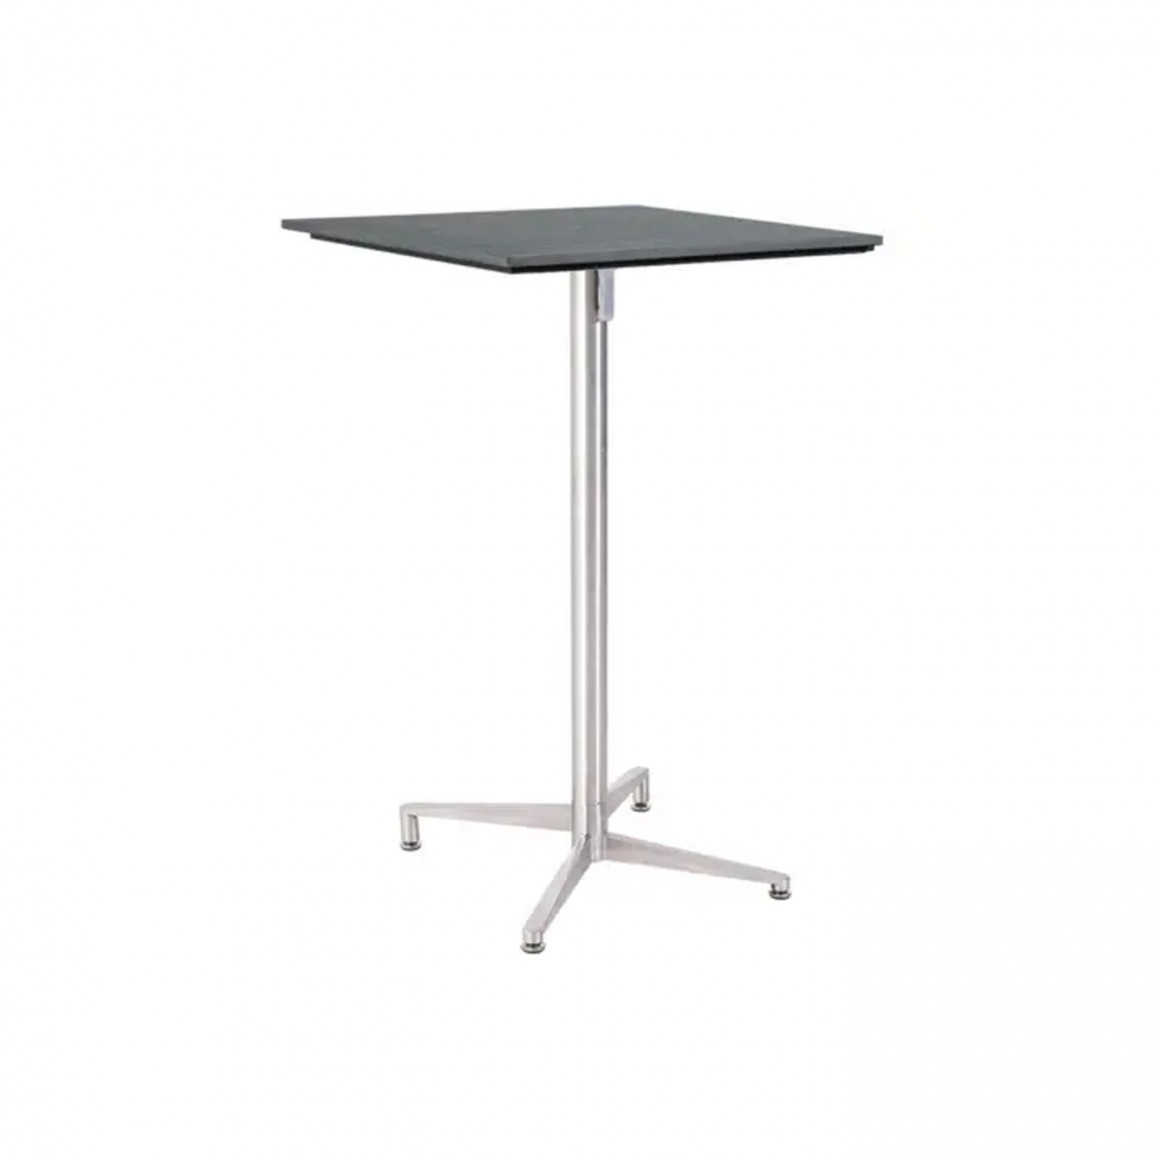 Table: 25mm thick laminate top + aluminum folding leg